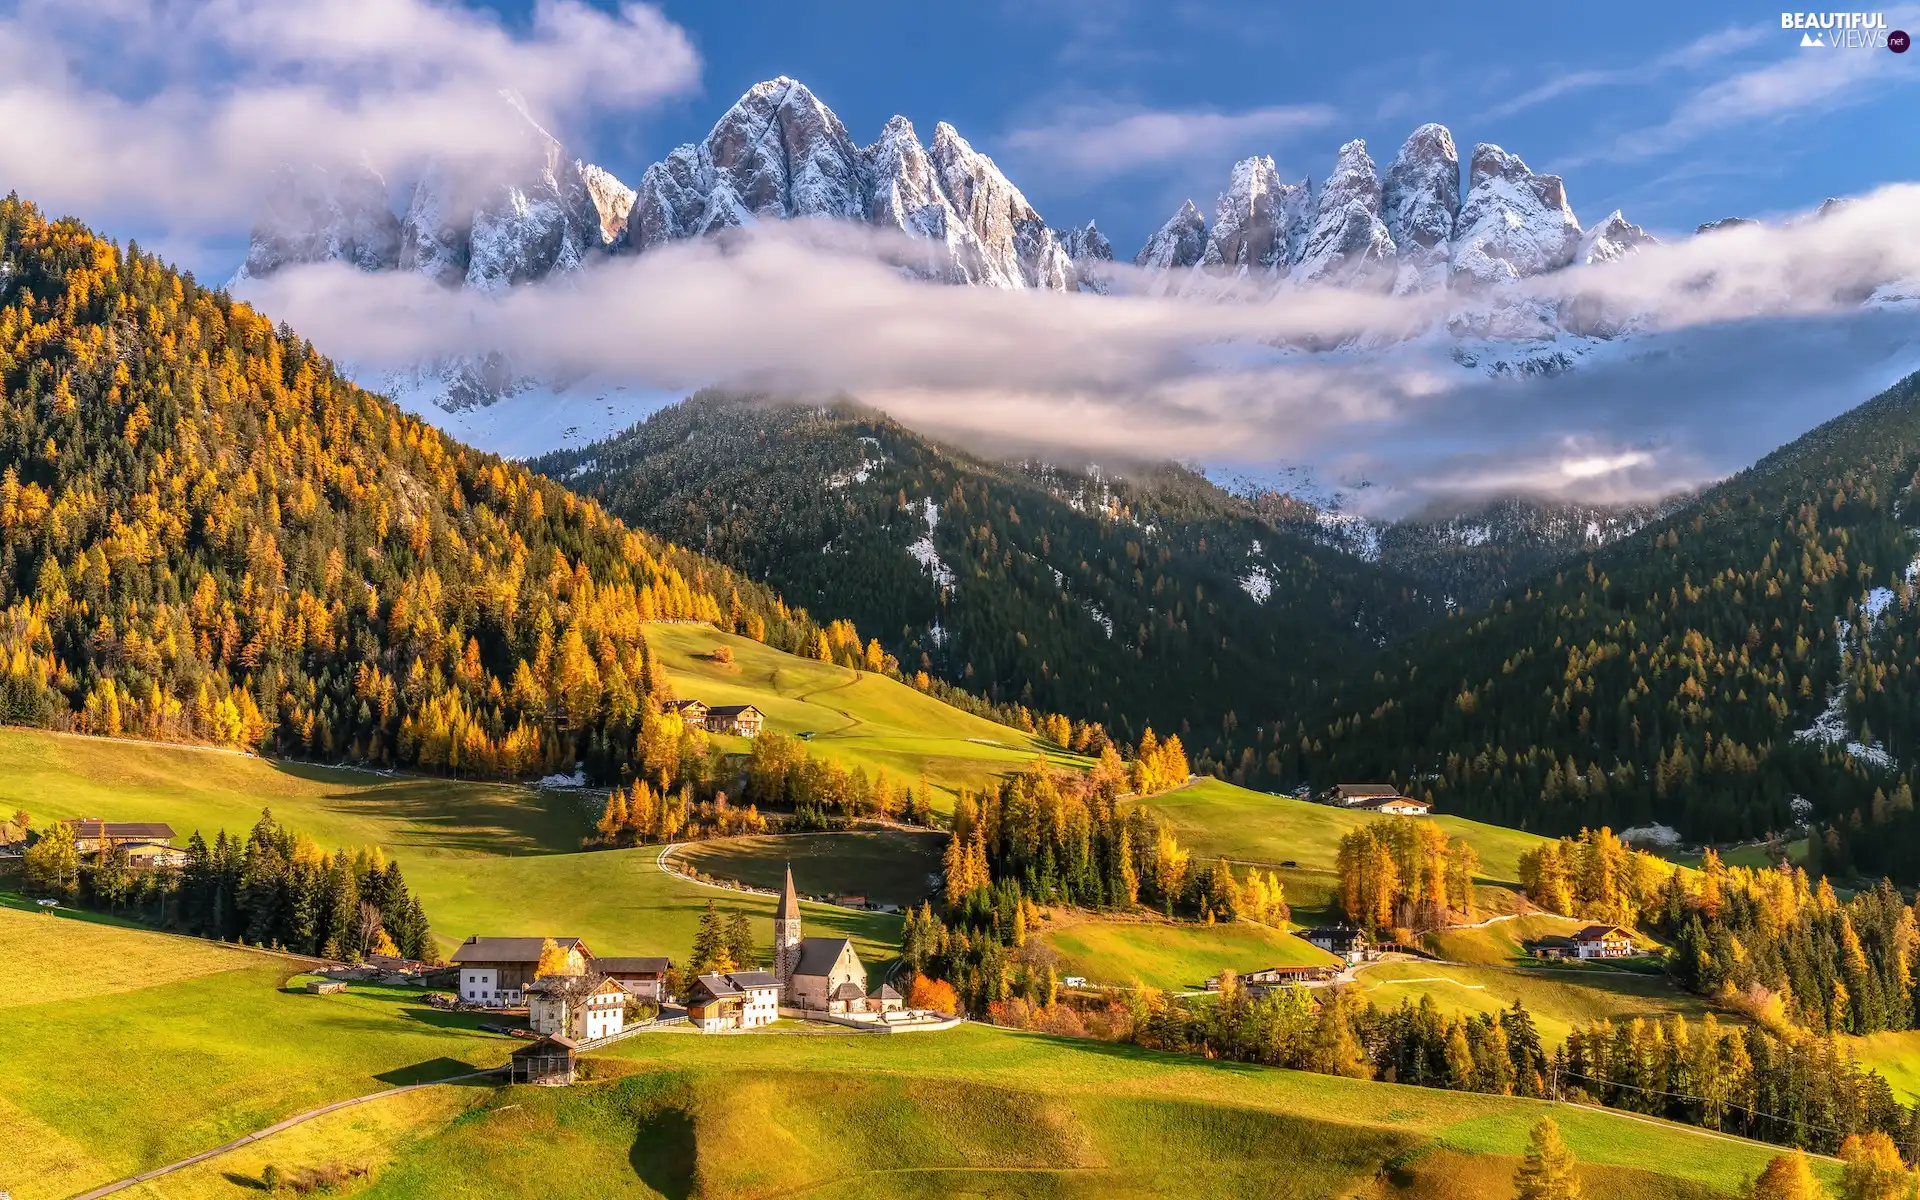 Dolomites, Mountains, Italy, autumn, trees, viewes, village, Santa Maddalena, Fog